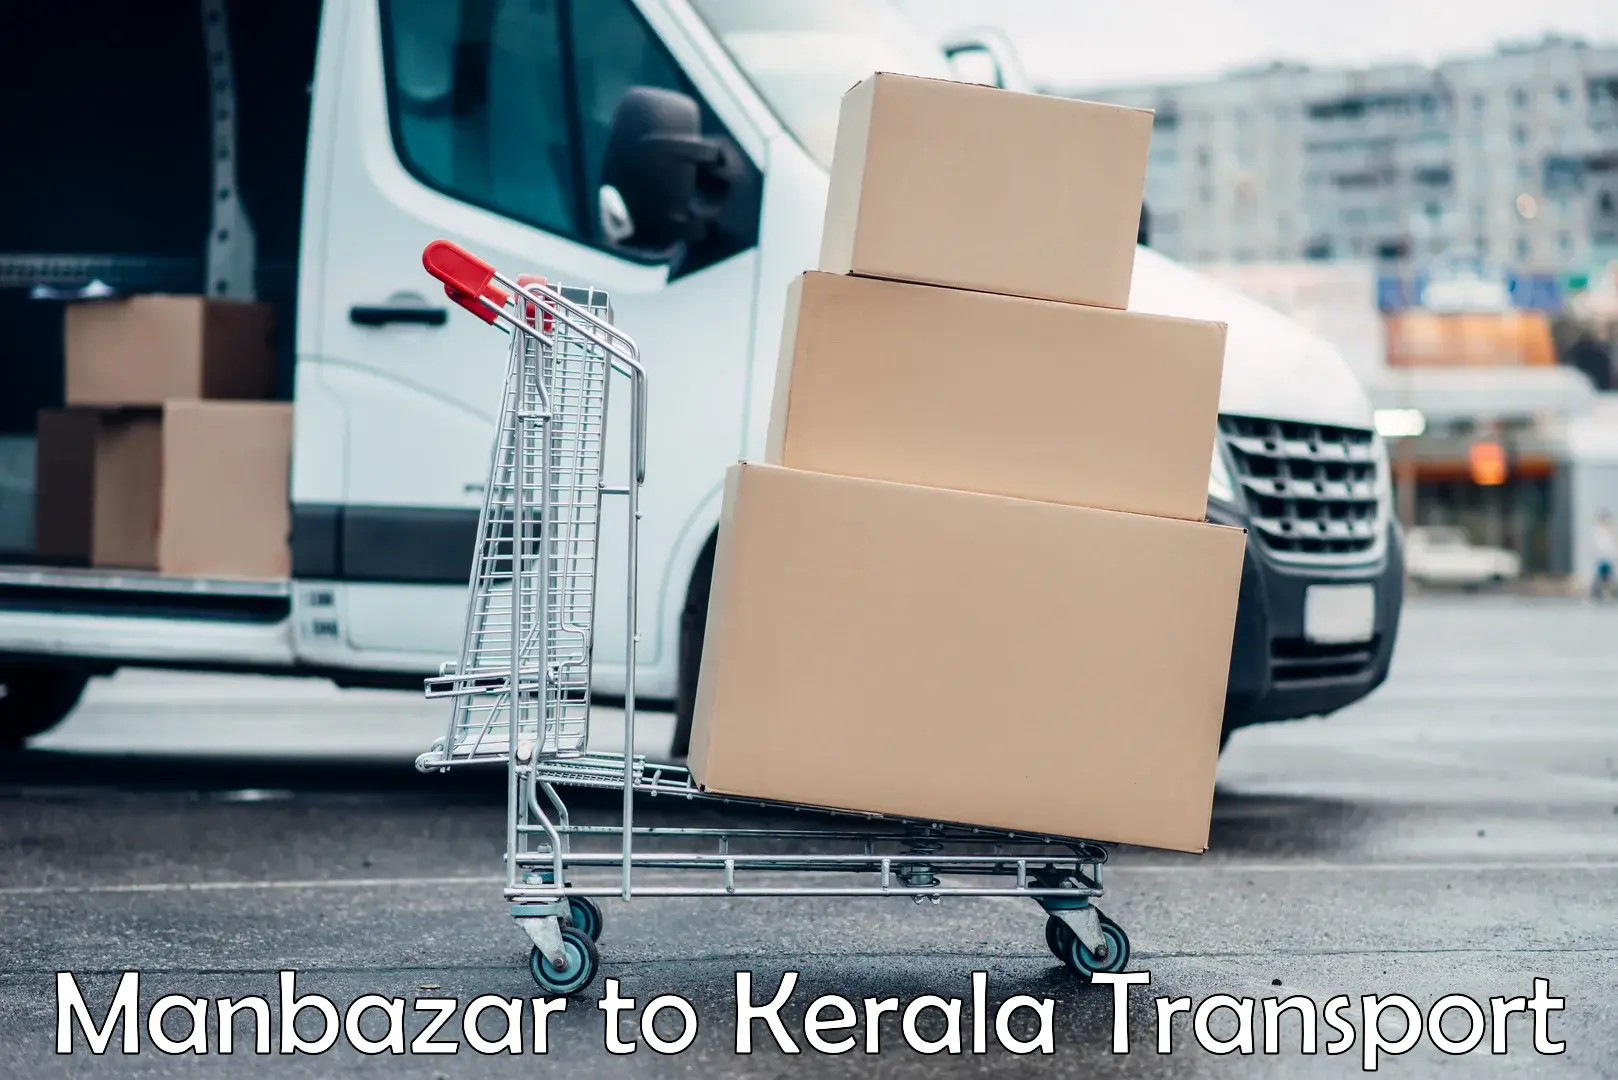 Transport in sharing Manbazar to Kallikkad